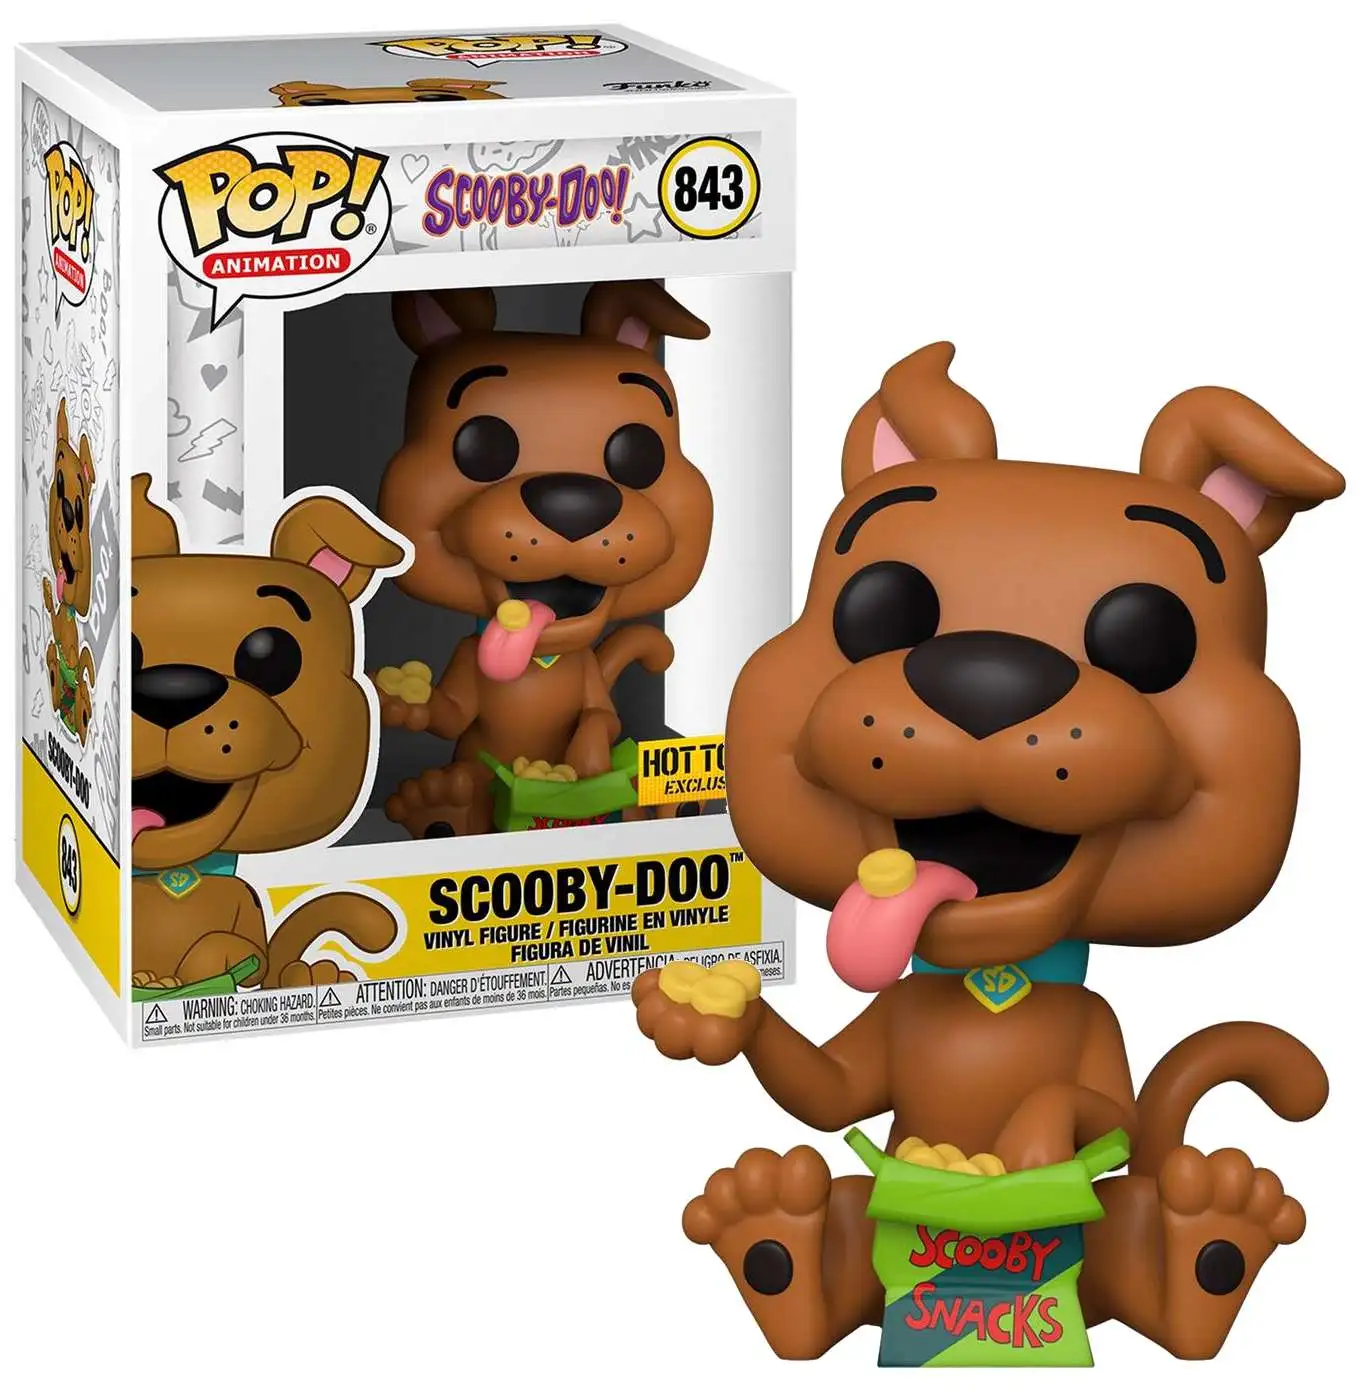 No 843 Scooby-Doo with Snacks Animation Funko Pop Looney Tunes 